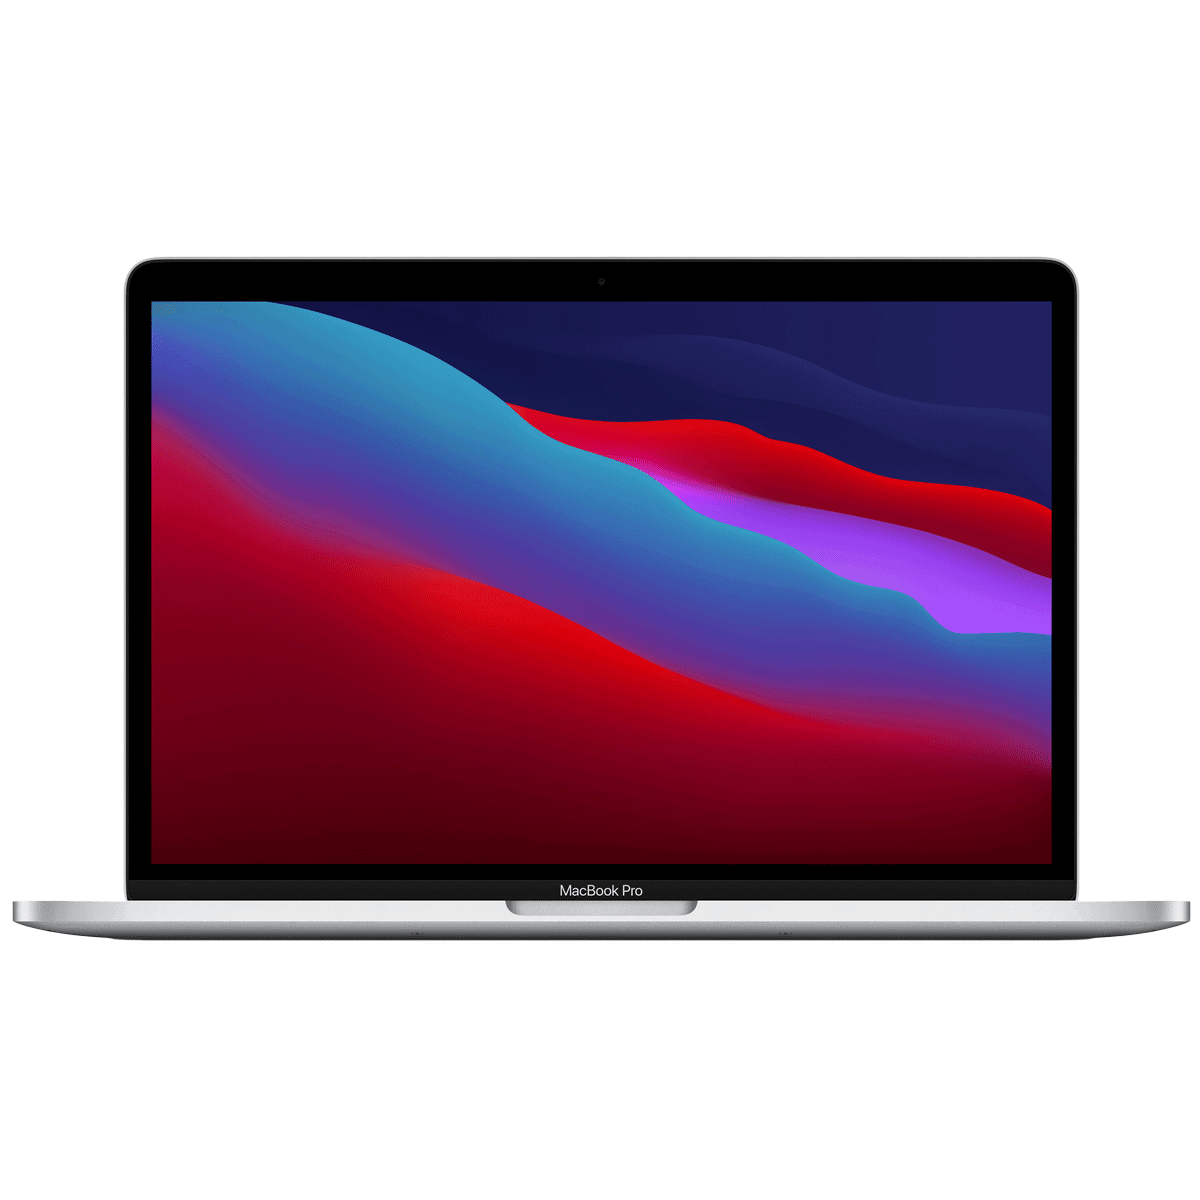 Buy Apple MacBook Pro (MYDC2HN/A) M1 Chip macOS Big Sur Laptop (8GB RAM